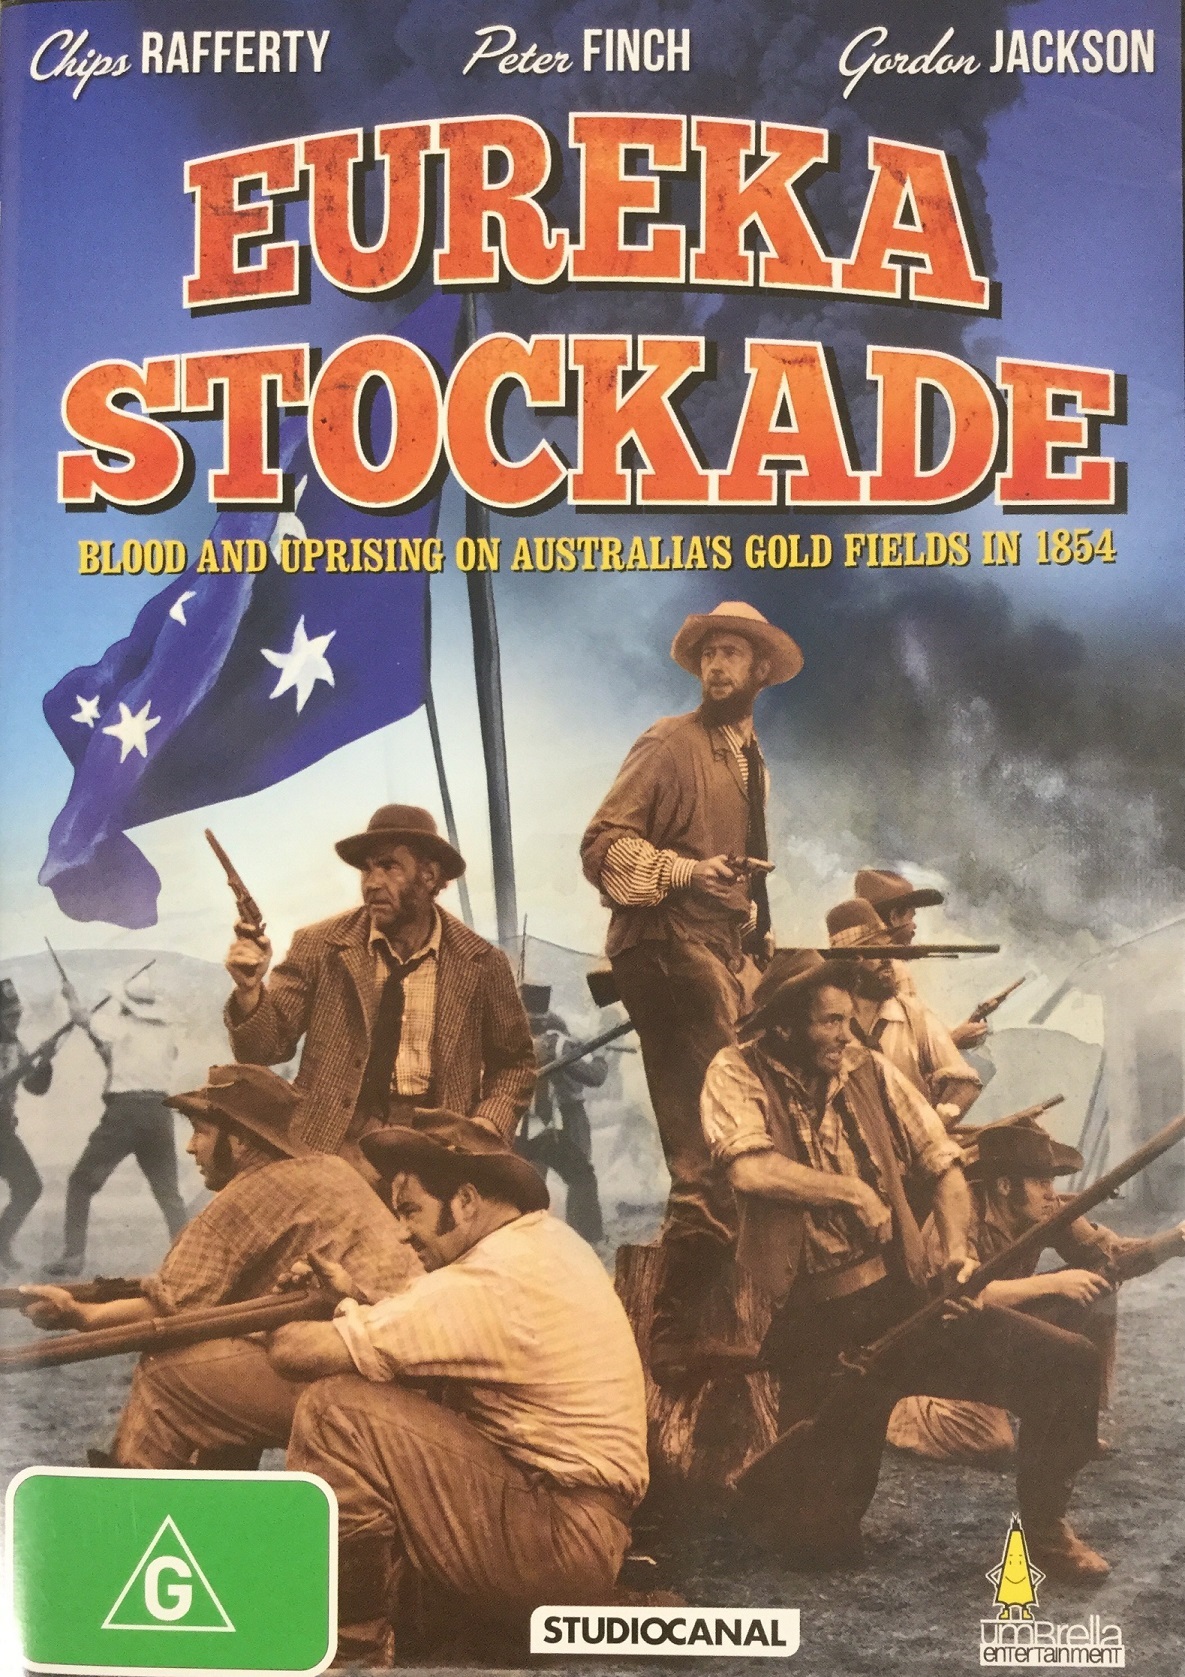 FEBRUARY-Eureka-Stockade-film-DVD-cover.jpg